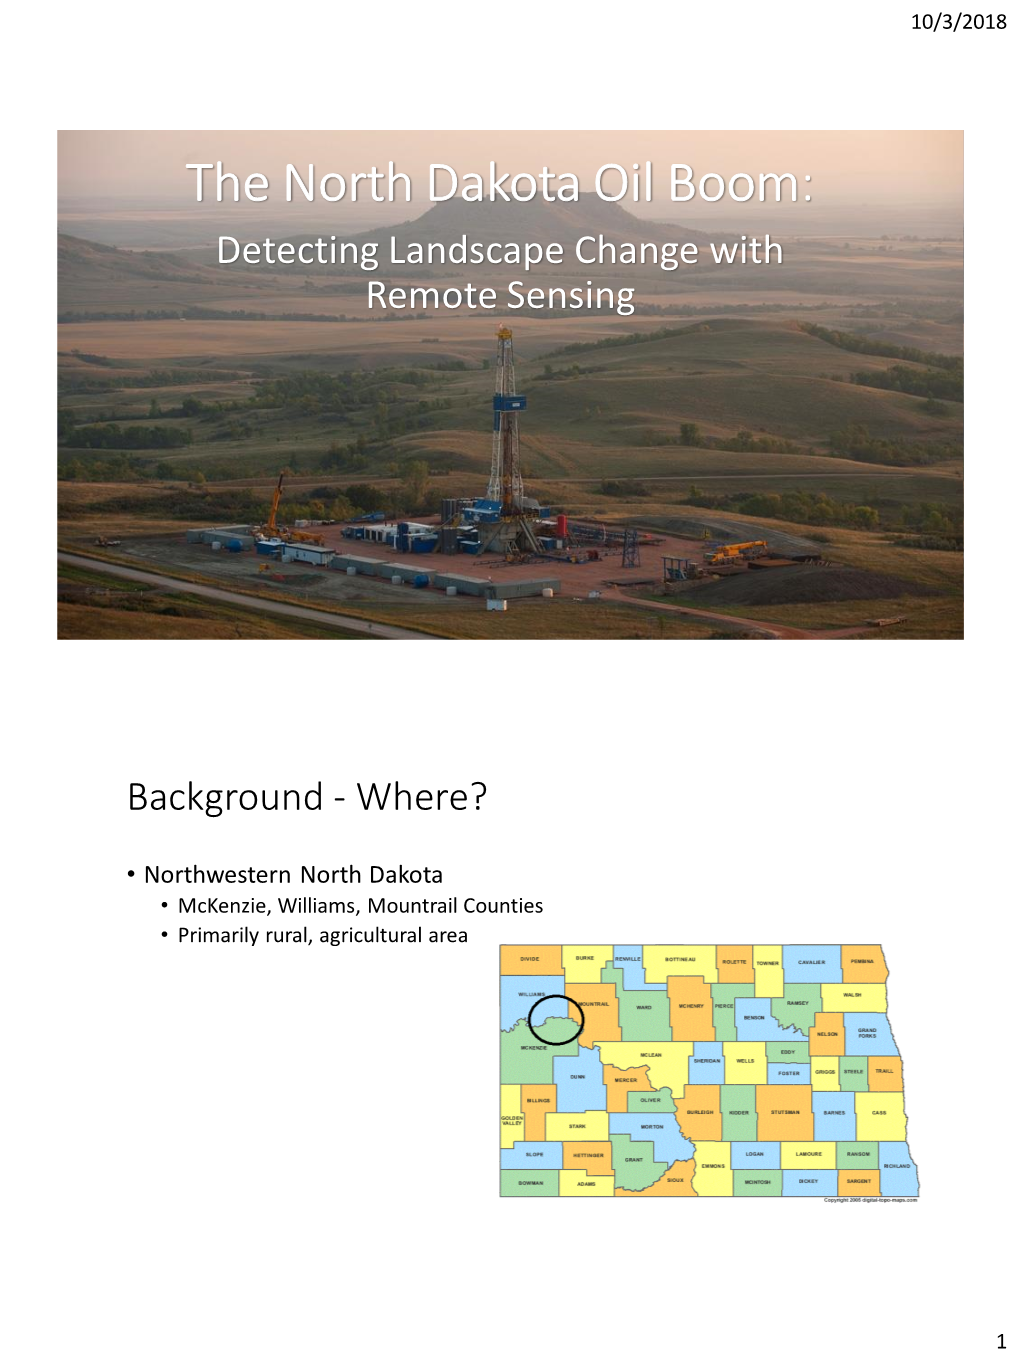 The North Dakota Oil Boom: Detecting Landscape Change with Remote Sensing